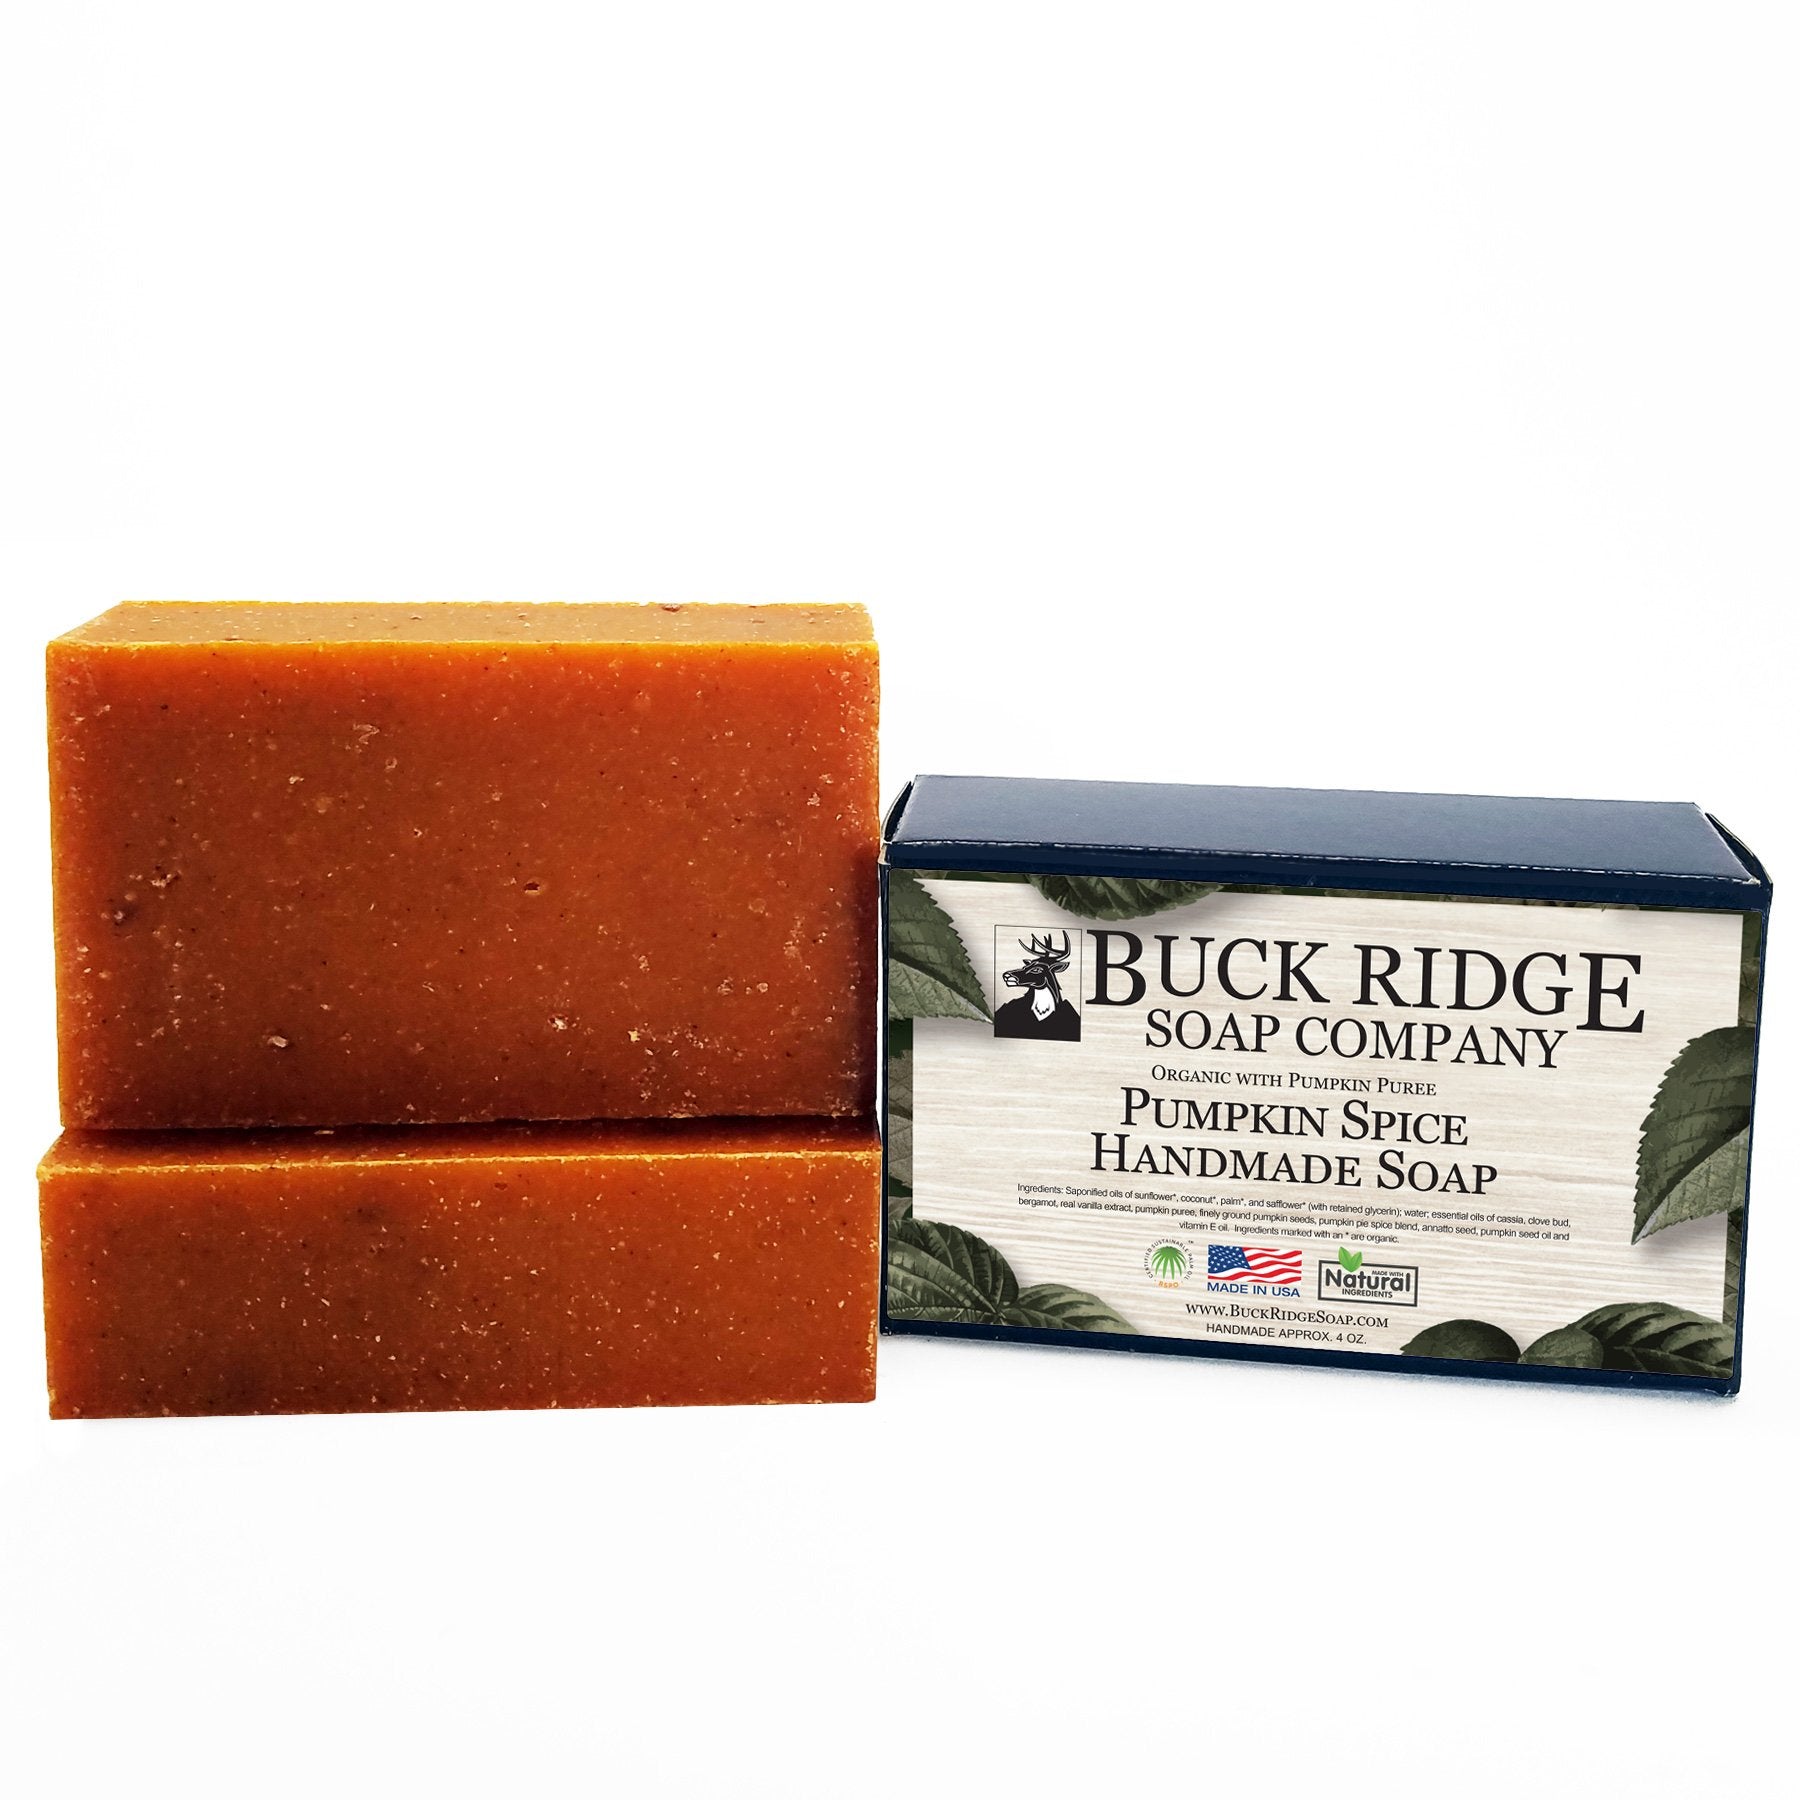 Pumpkin Spice Handmade Soap - USDA Certified Organic